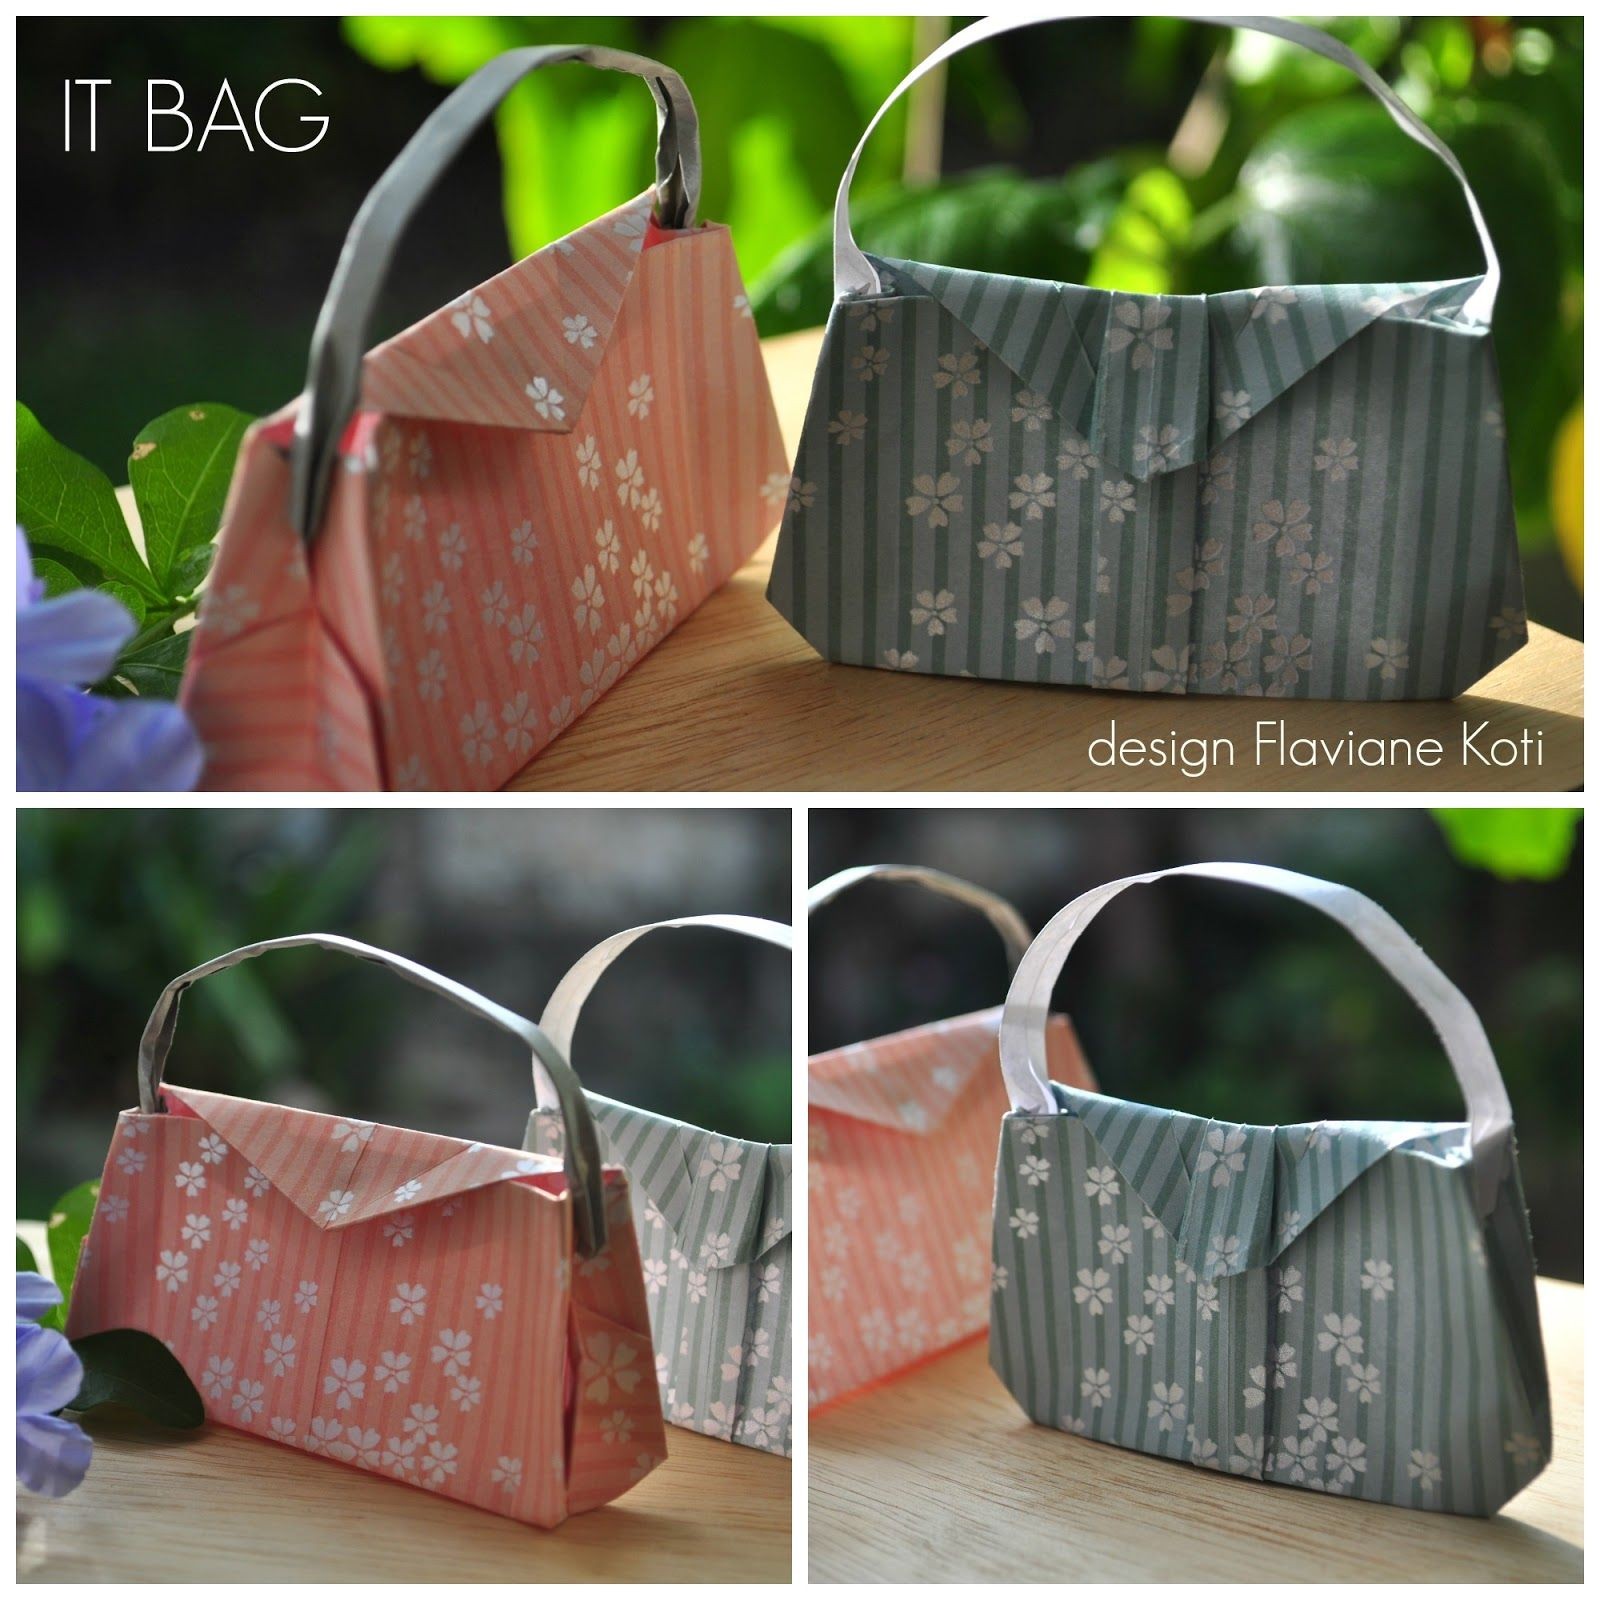 Papercraft Bag Terapia Do Papel It Bag origami E orinuno Design Flaviane Koti